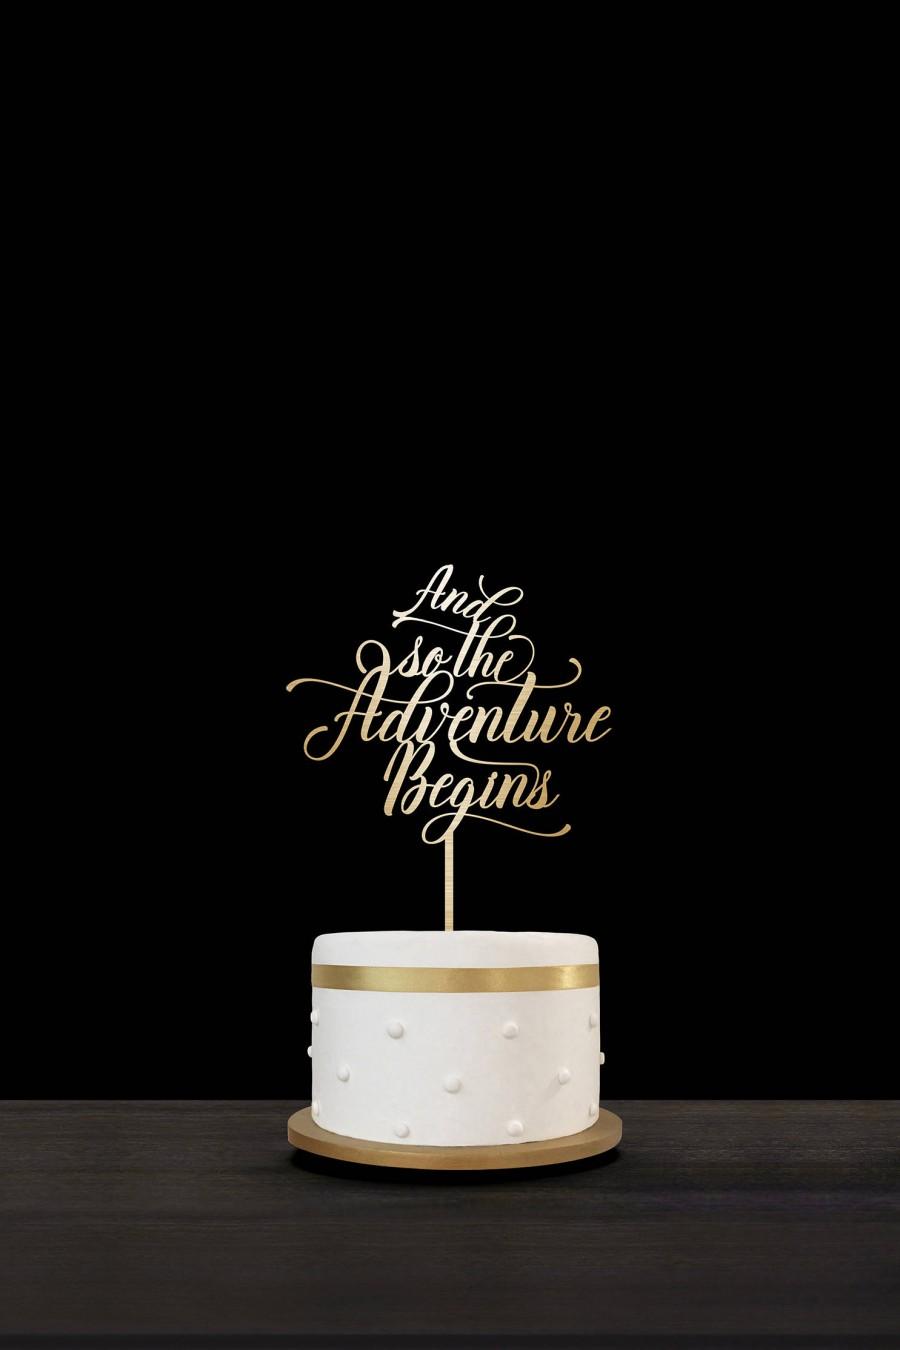 Свадьба - Customized Wedding Cake Topper, Personalized Cake Topper for Wedding,Custom Personalized Wedding Cake Topper, Adventure Begins Cake Topper20